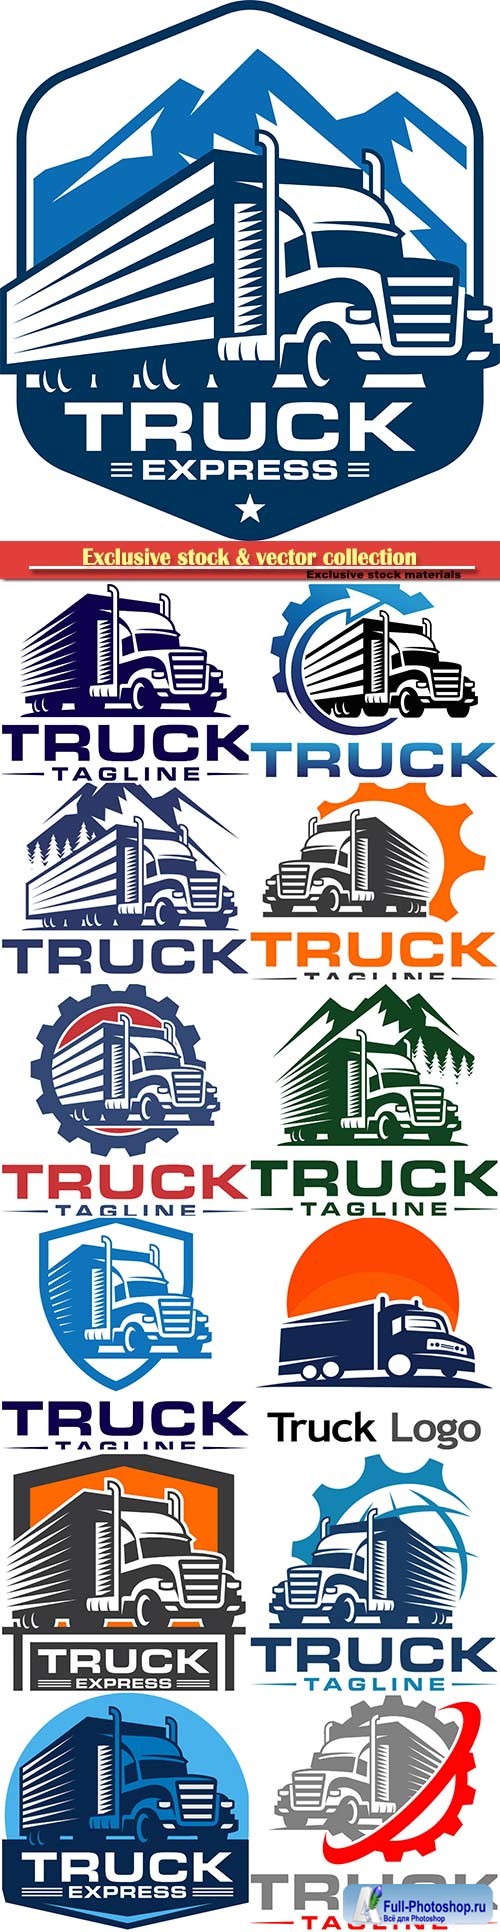 Truck tagline vector logo